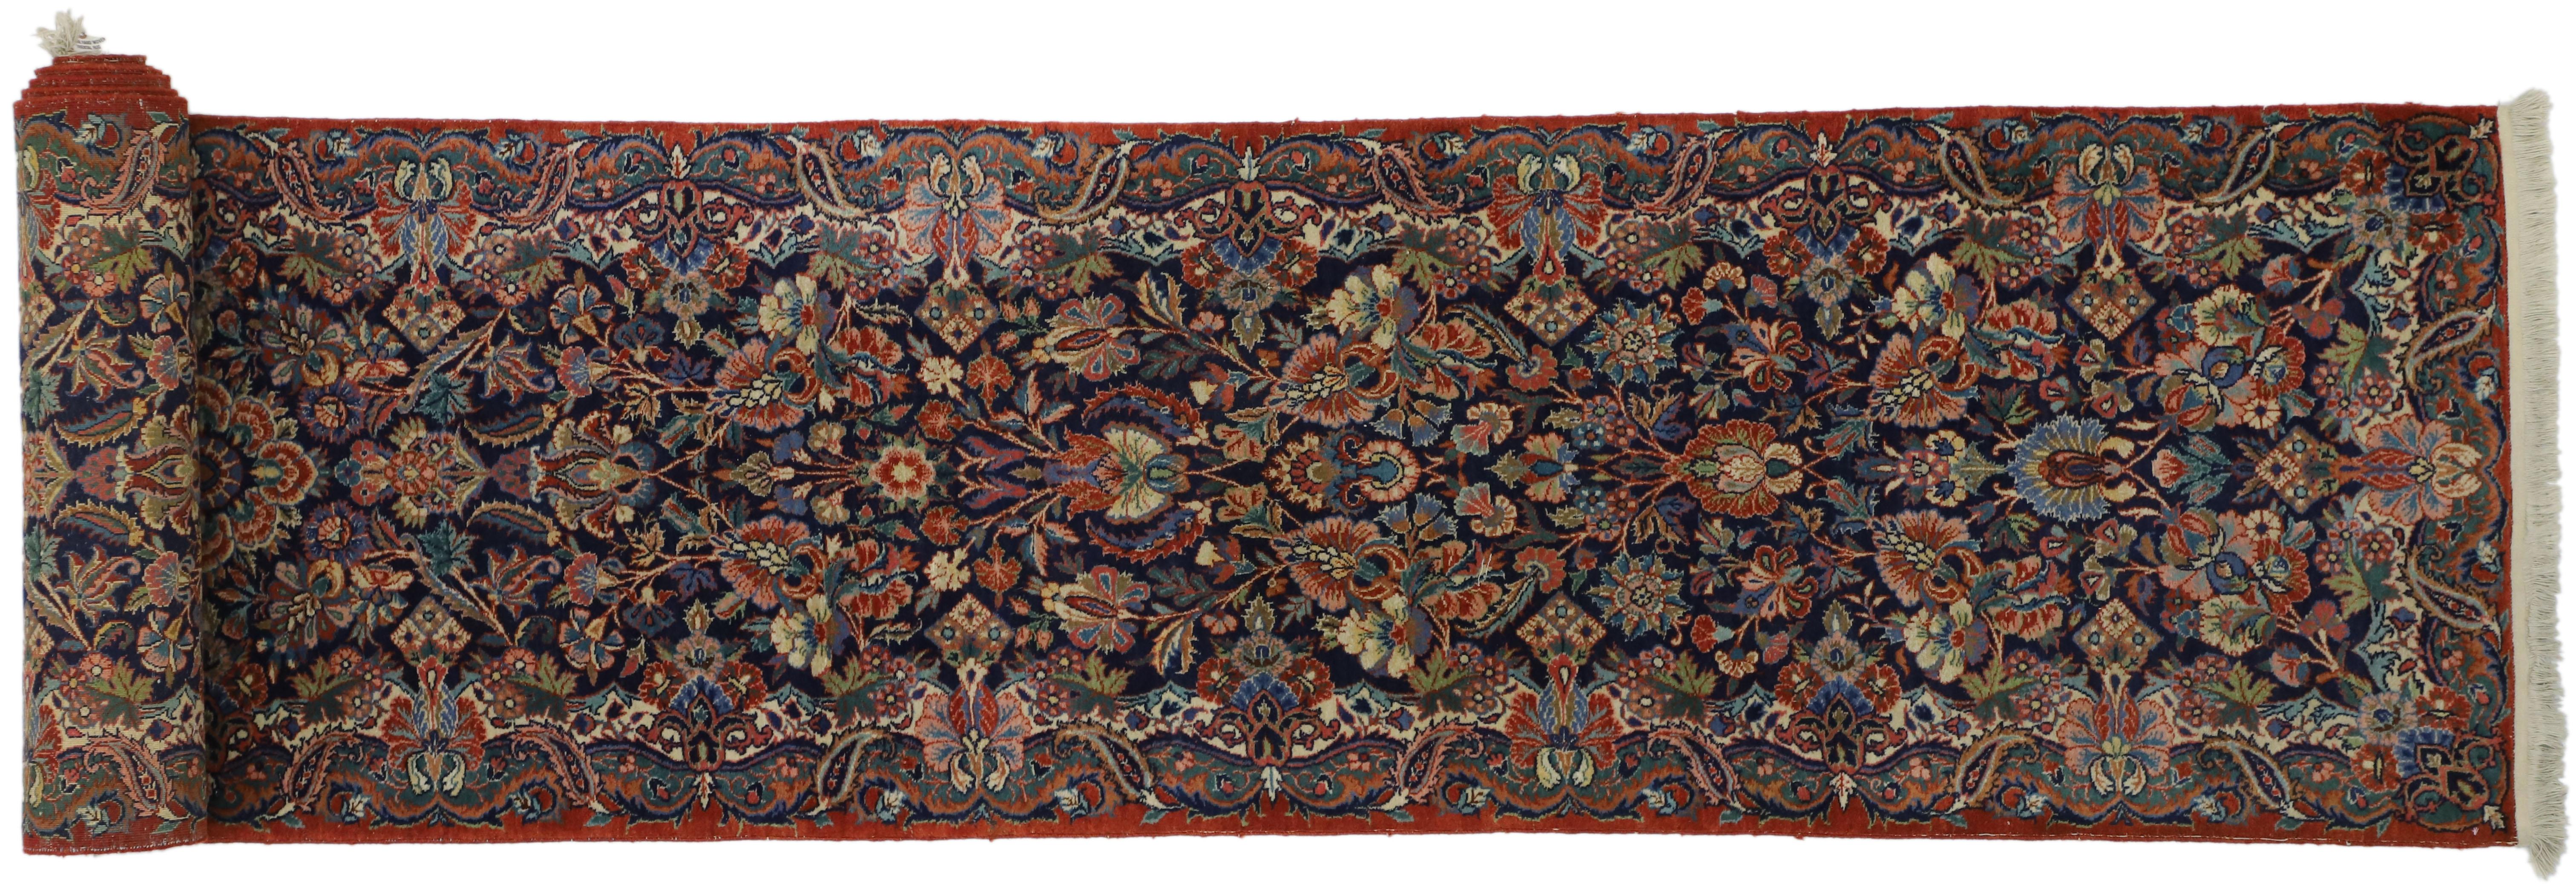 Antique Persian Qazvin Kirman Rug Runner with Luxe Baroque Regency Style 3